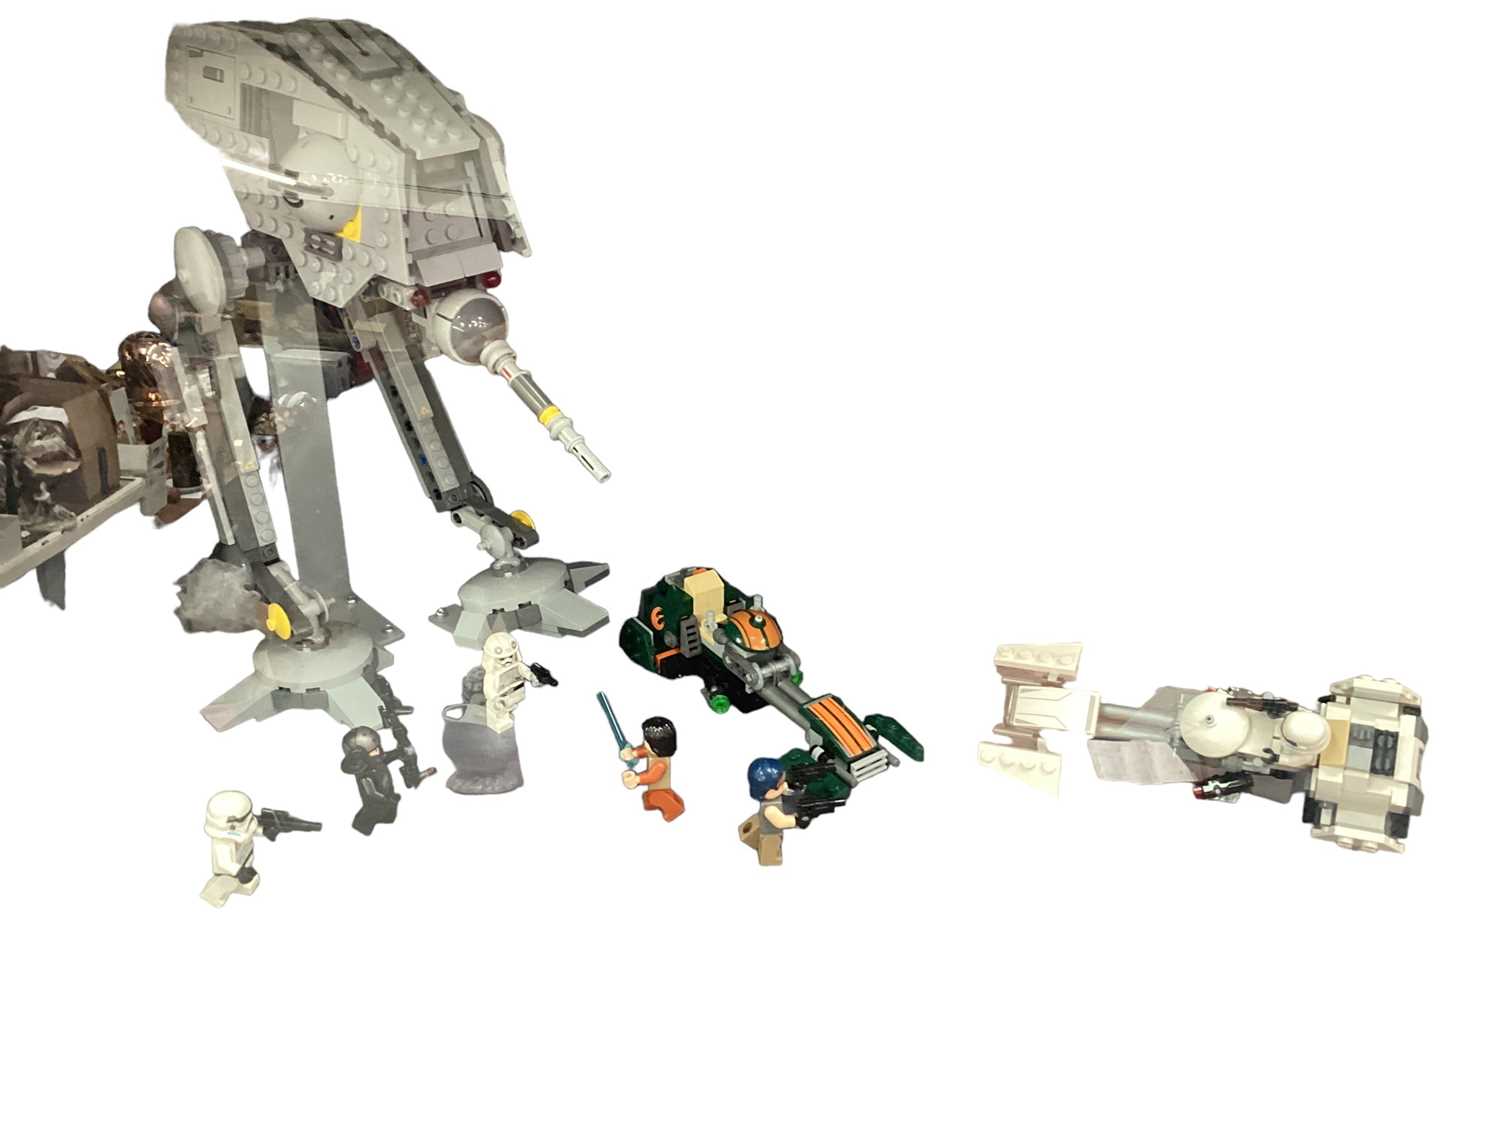 Lego Star Wars Shop Diorama with Ezras Speeder Bike No.75090 & AT-DP No.75083 (1) - Image 2 of 3